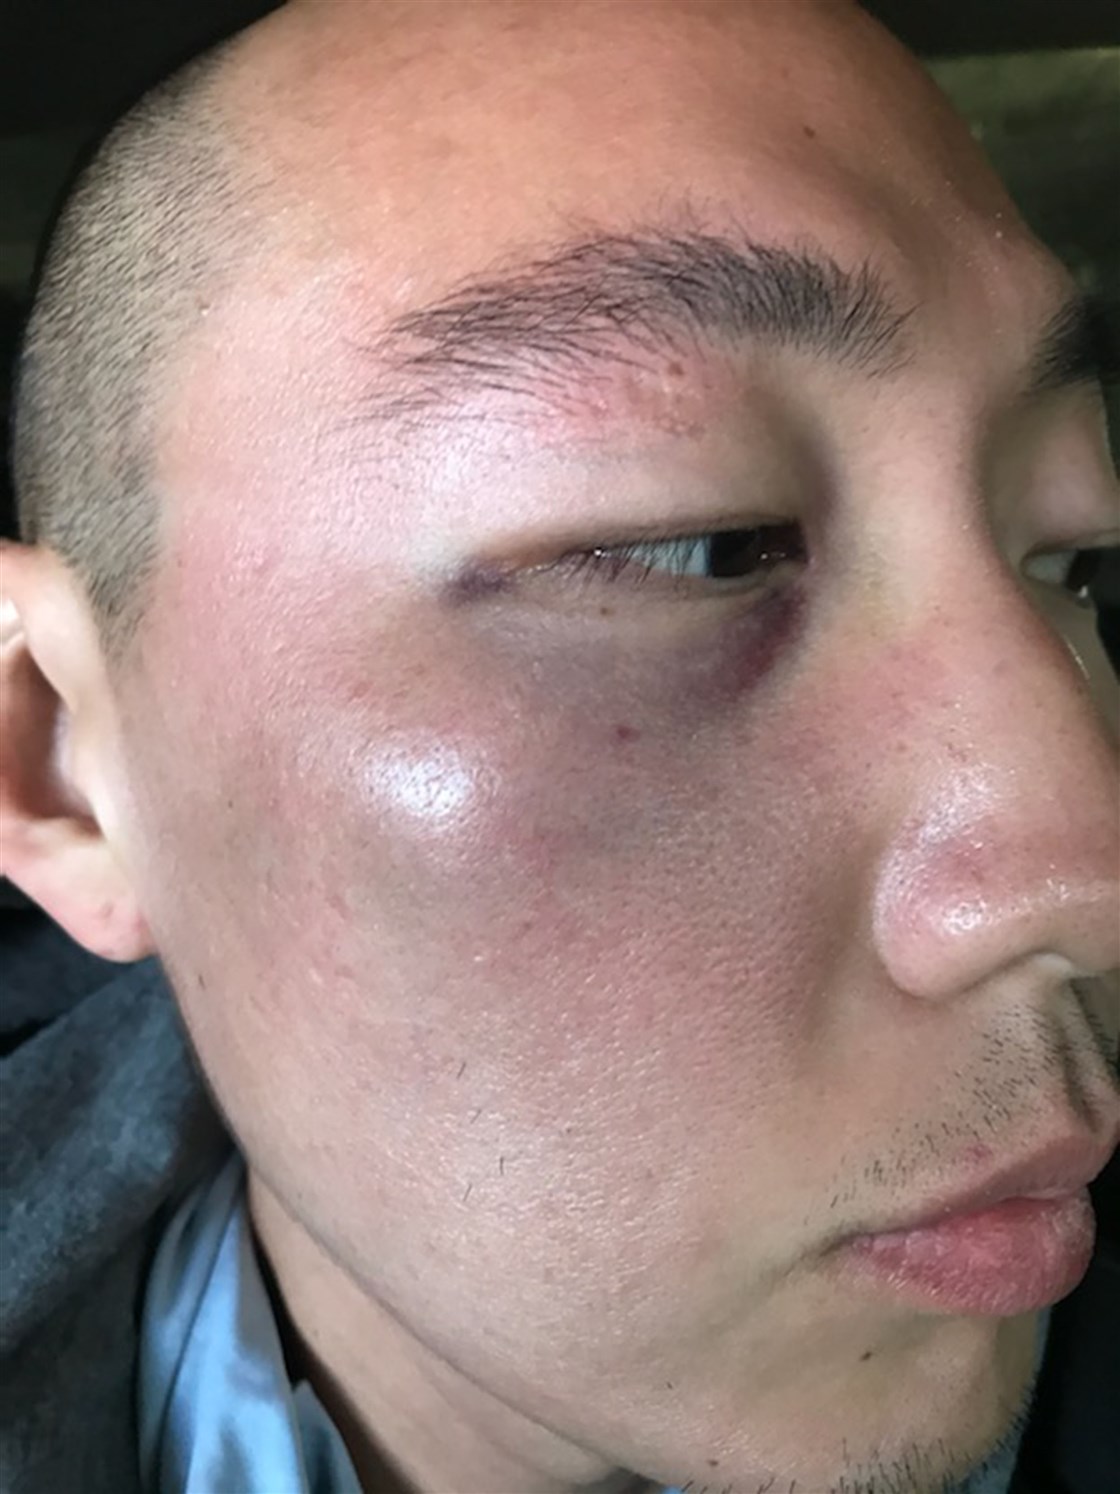 Denny Kim's injury from attack